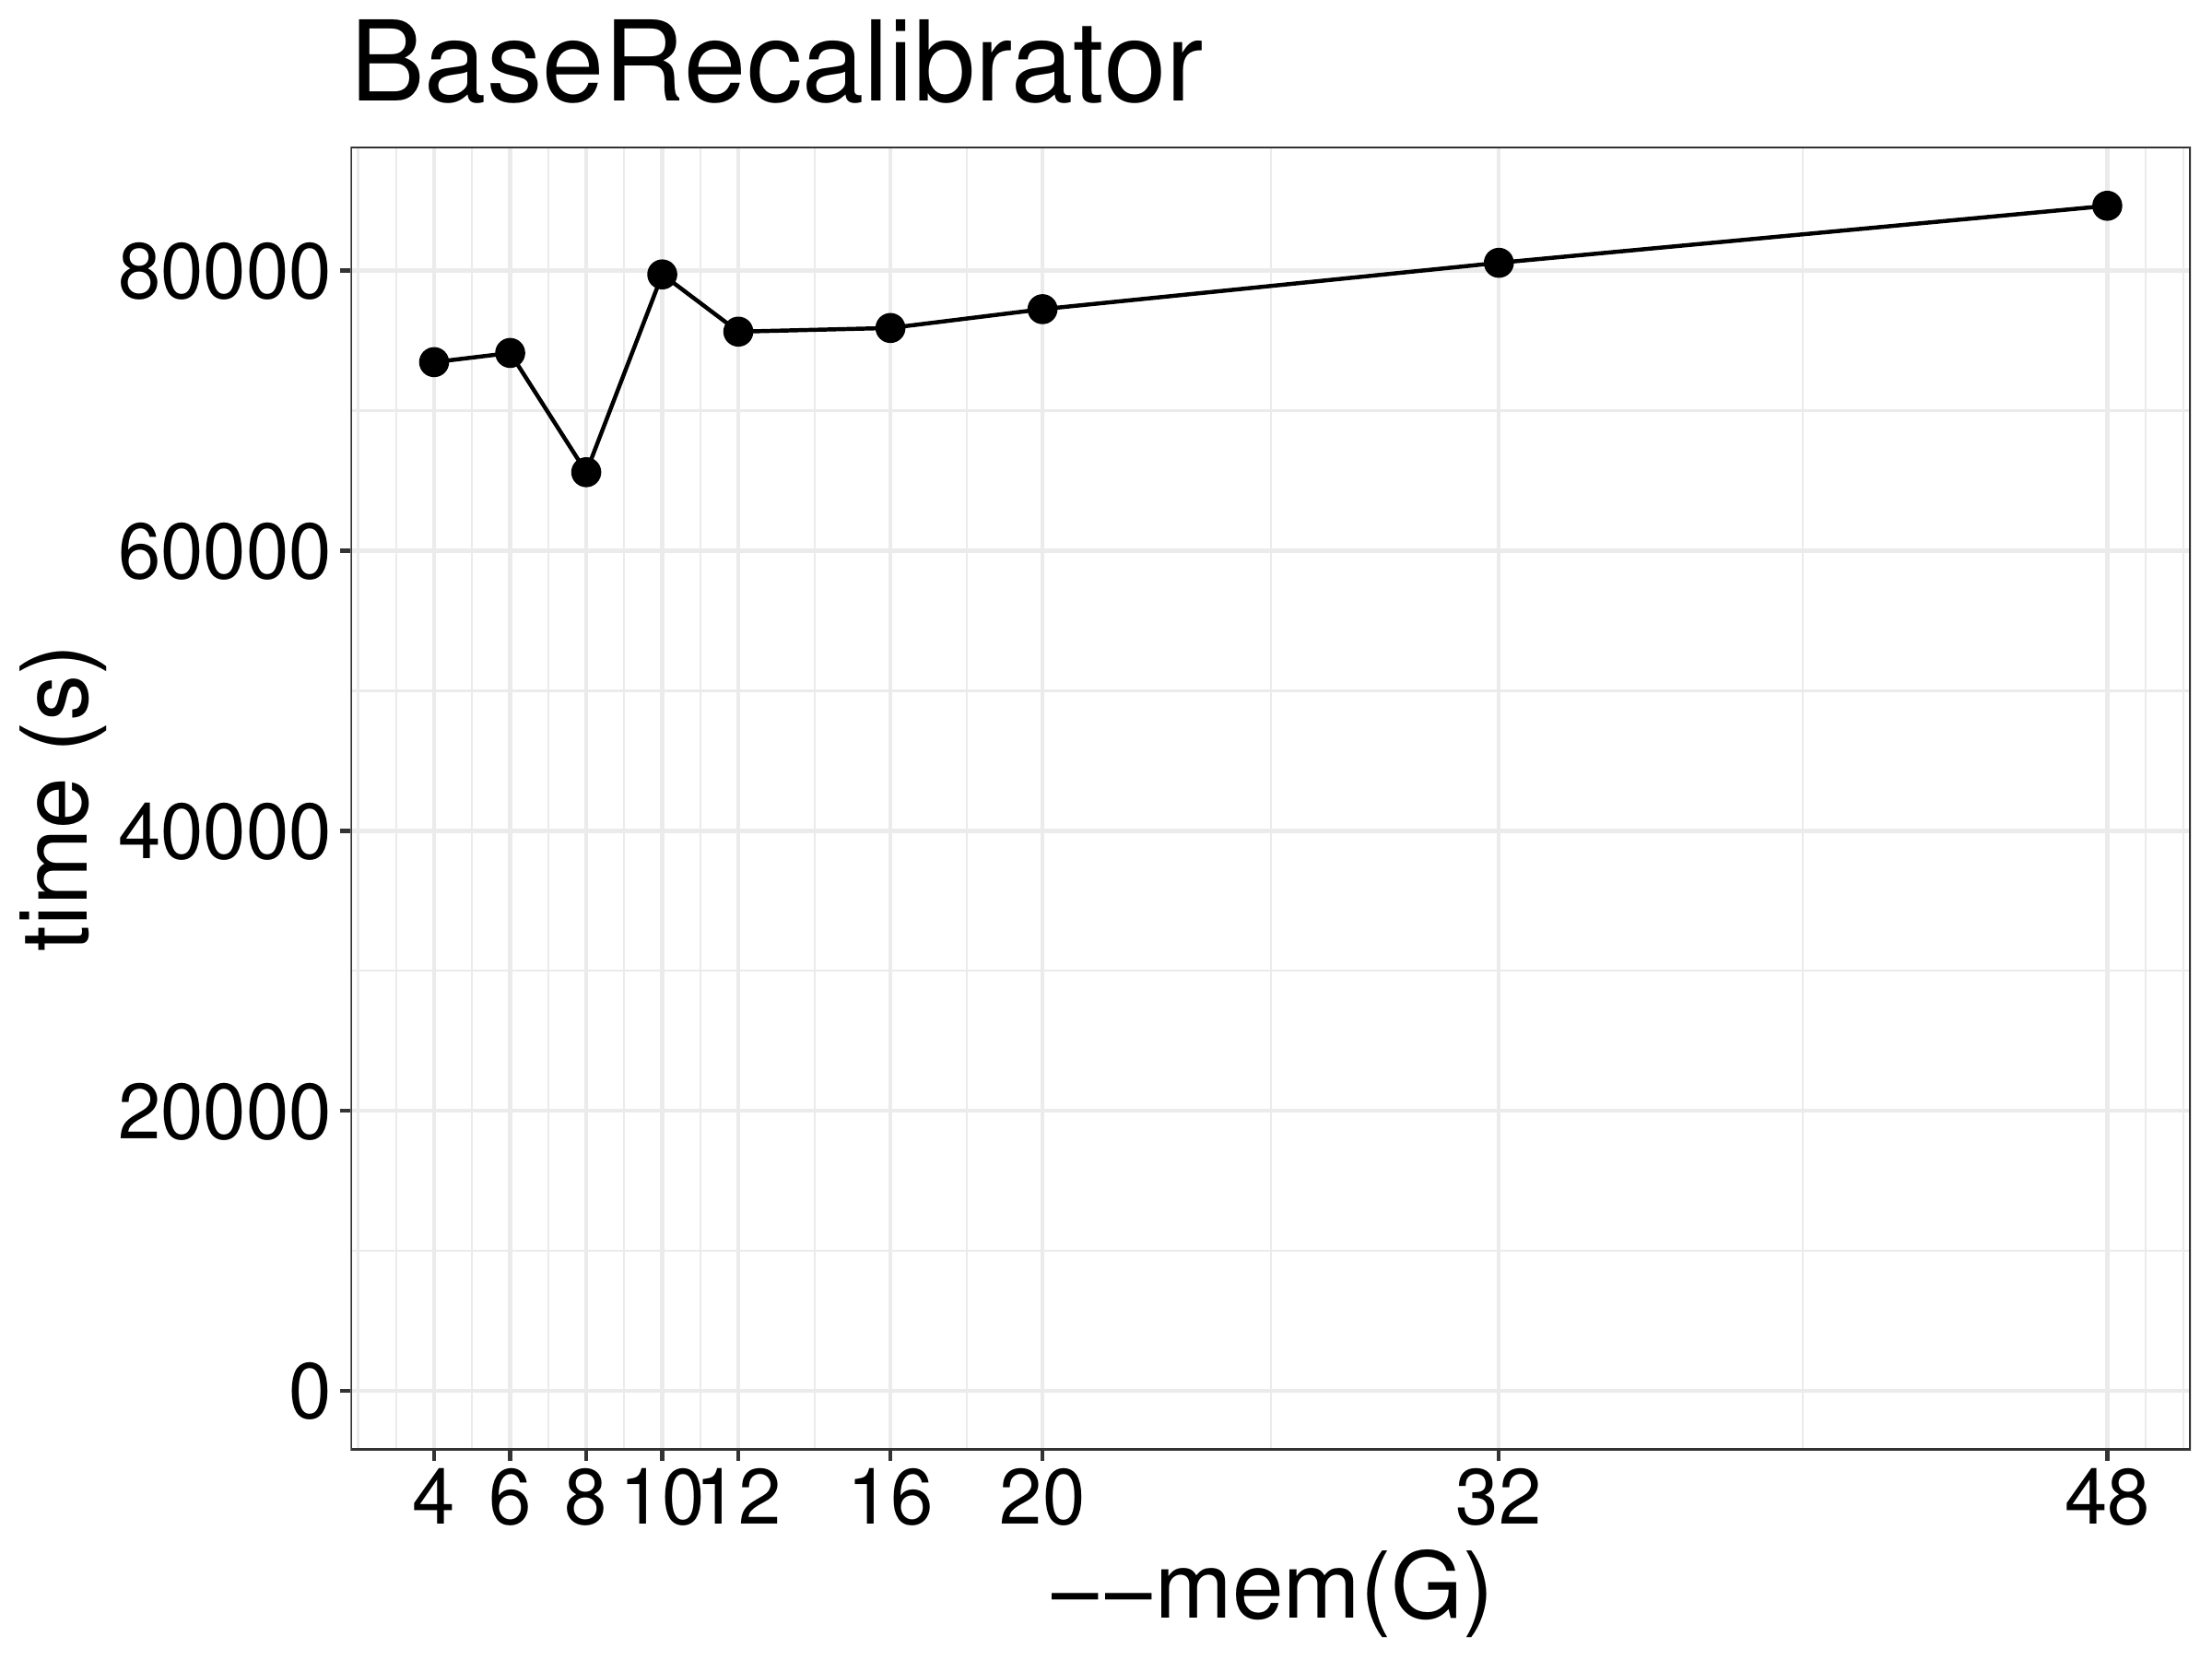 BaseRecalibrator runtime as a function of memory